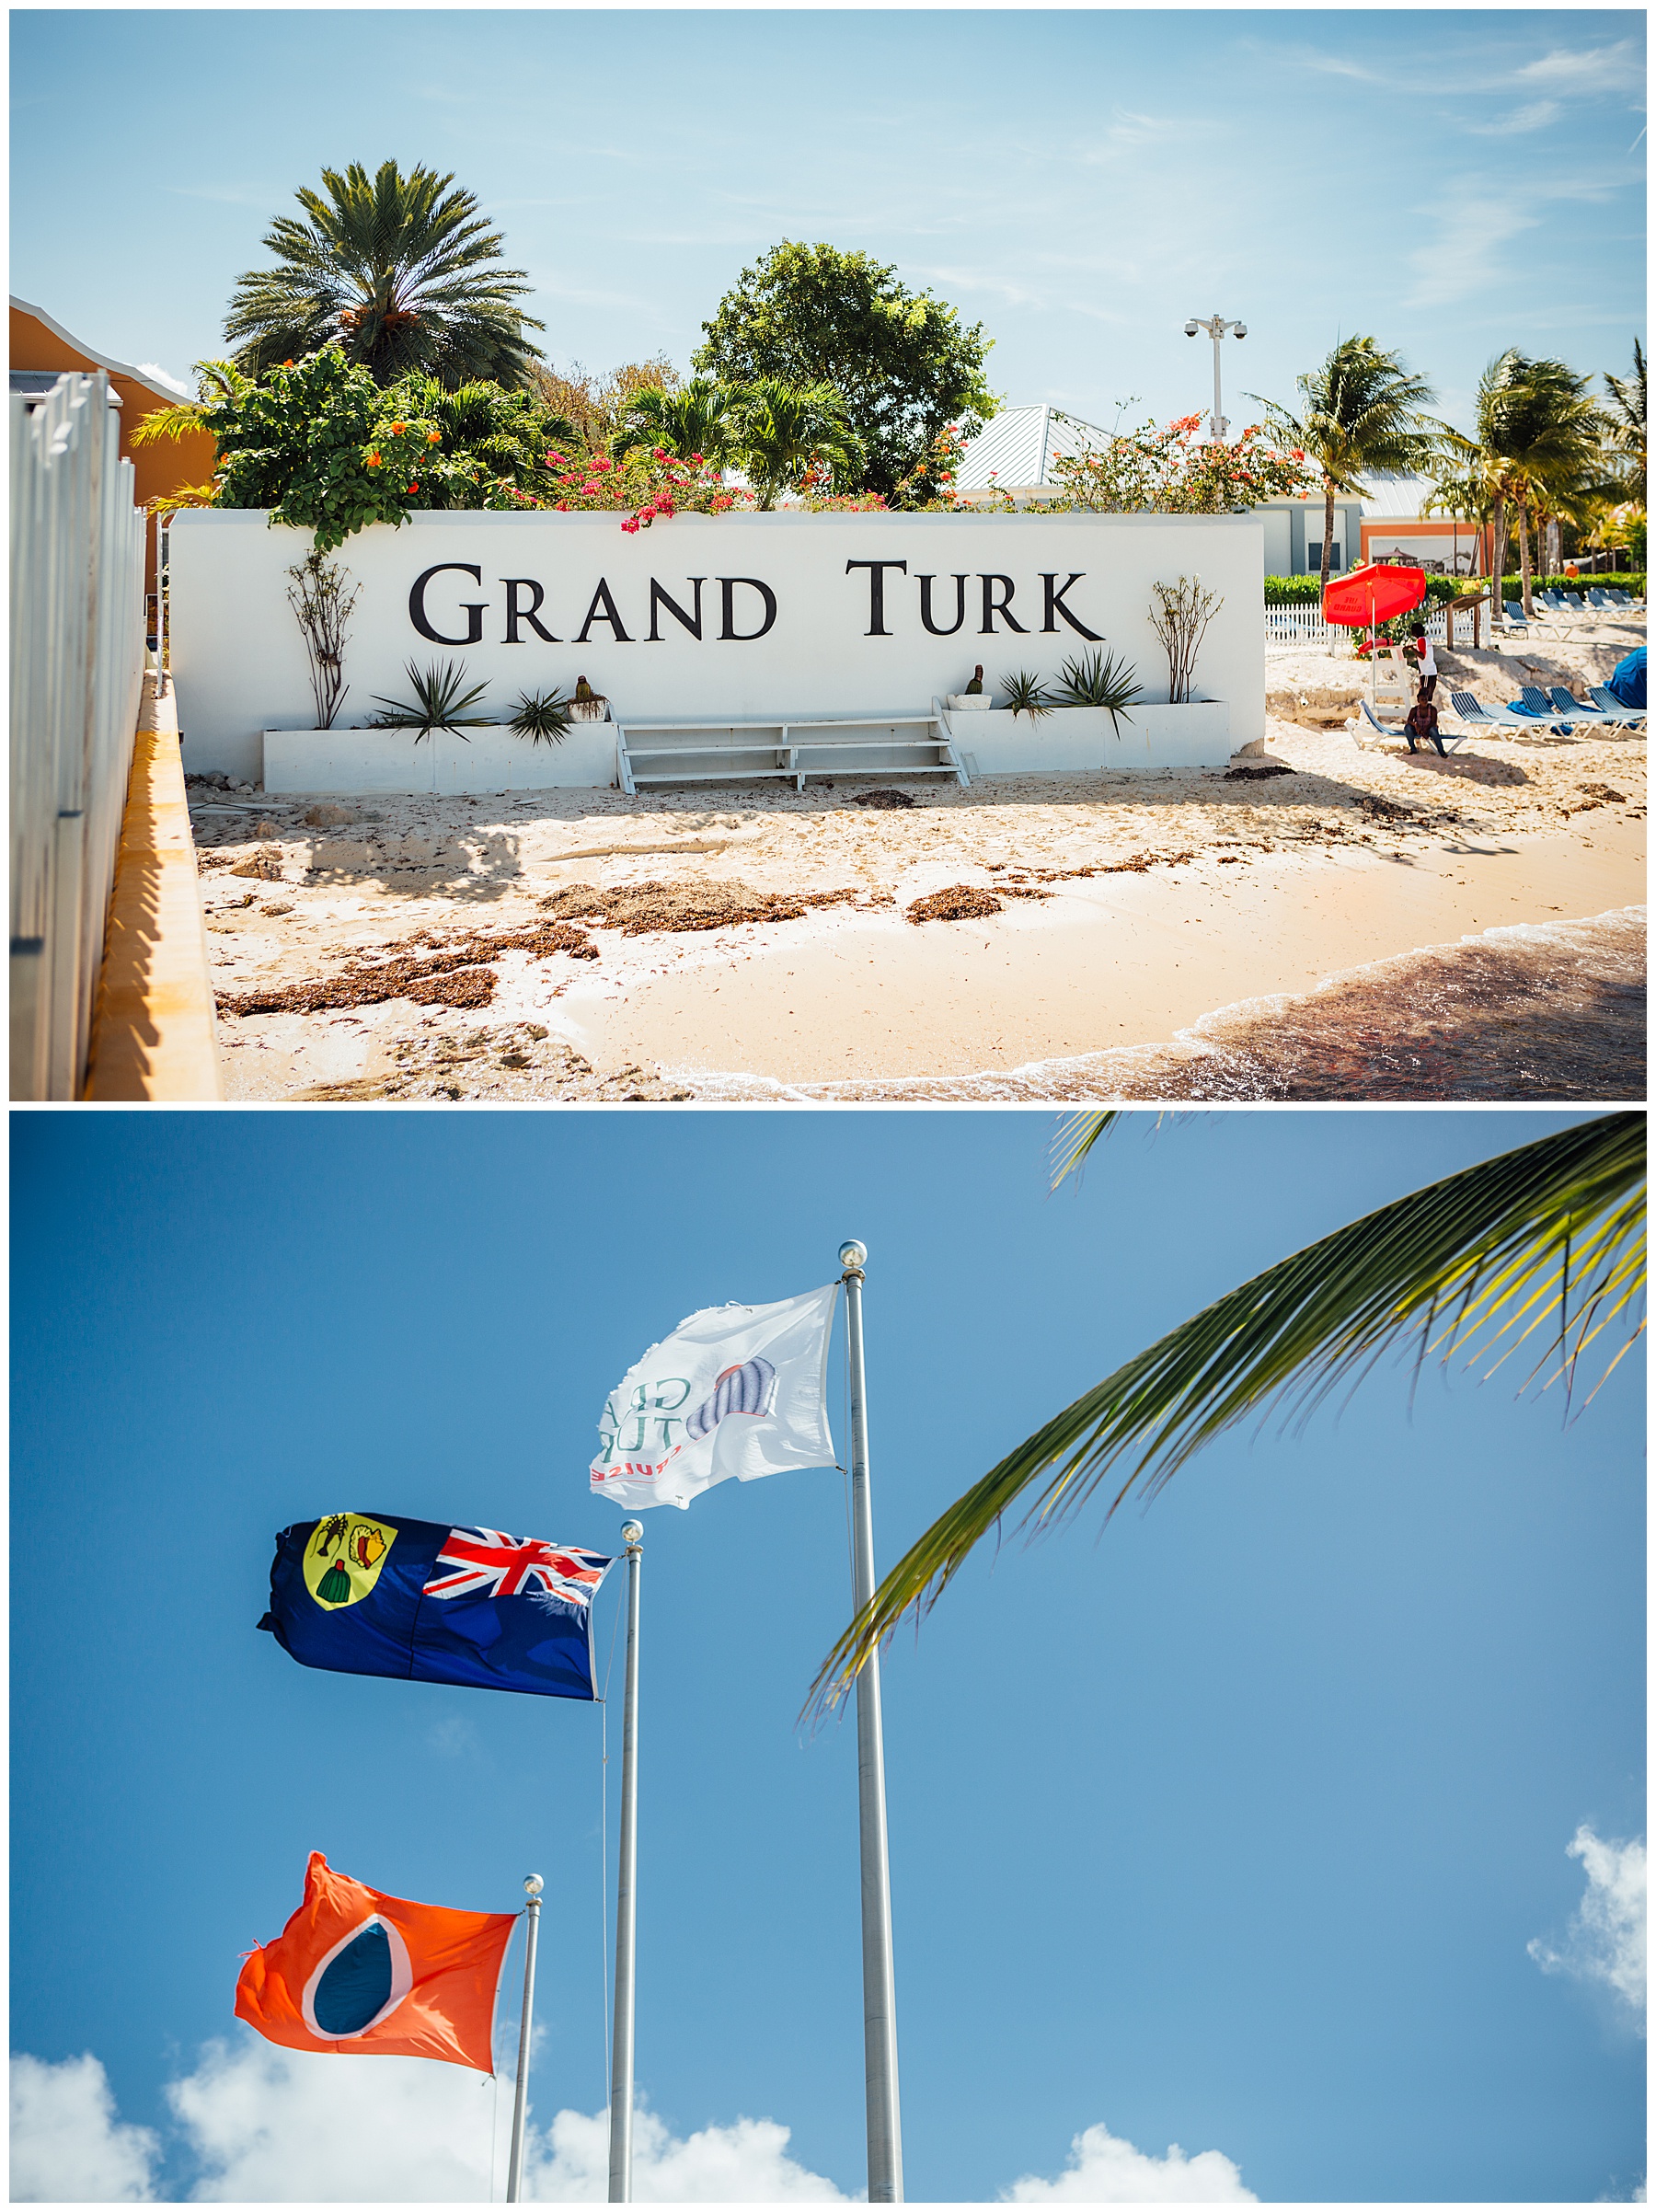 Grand Turk sign